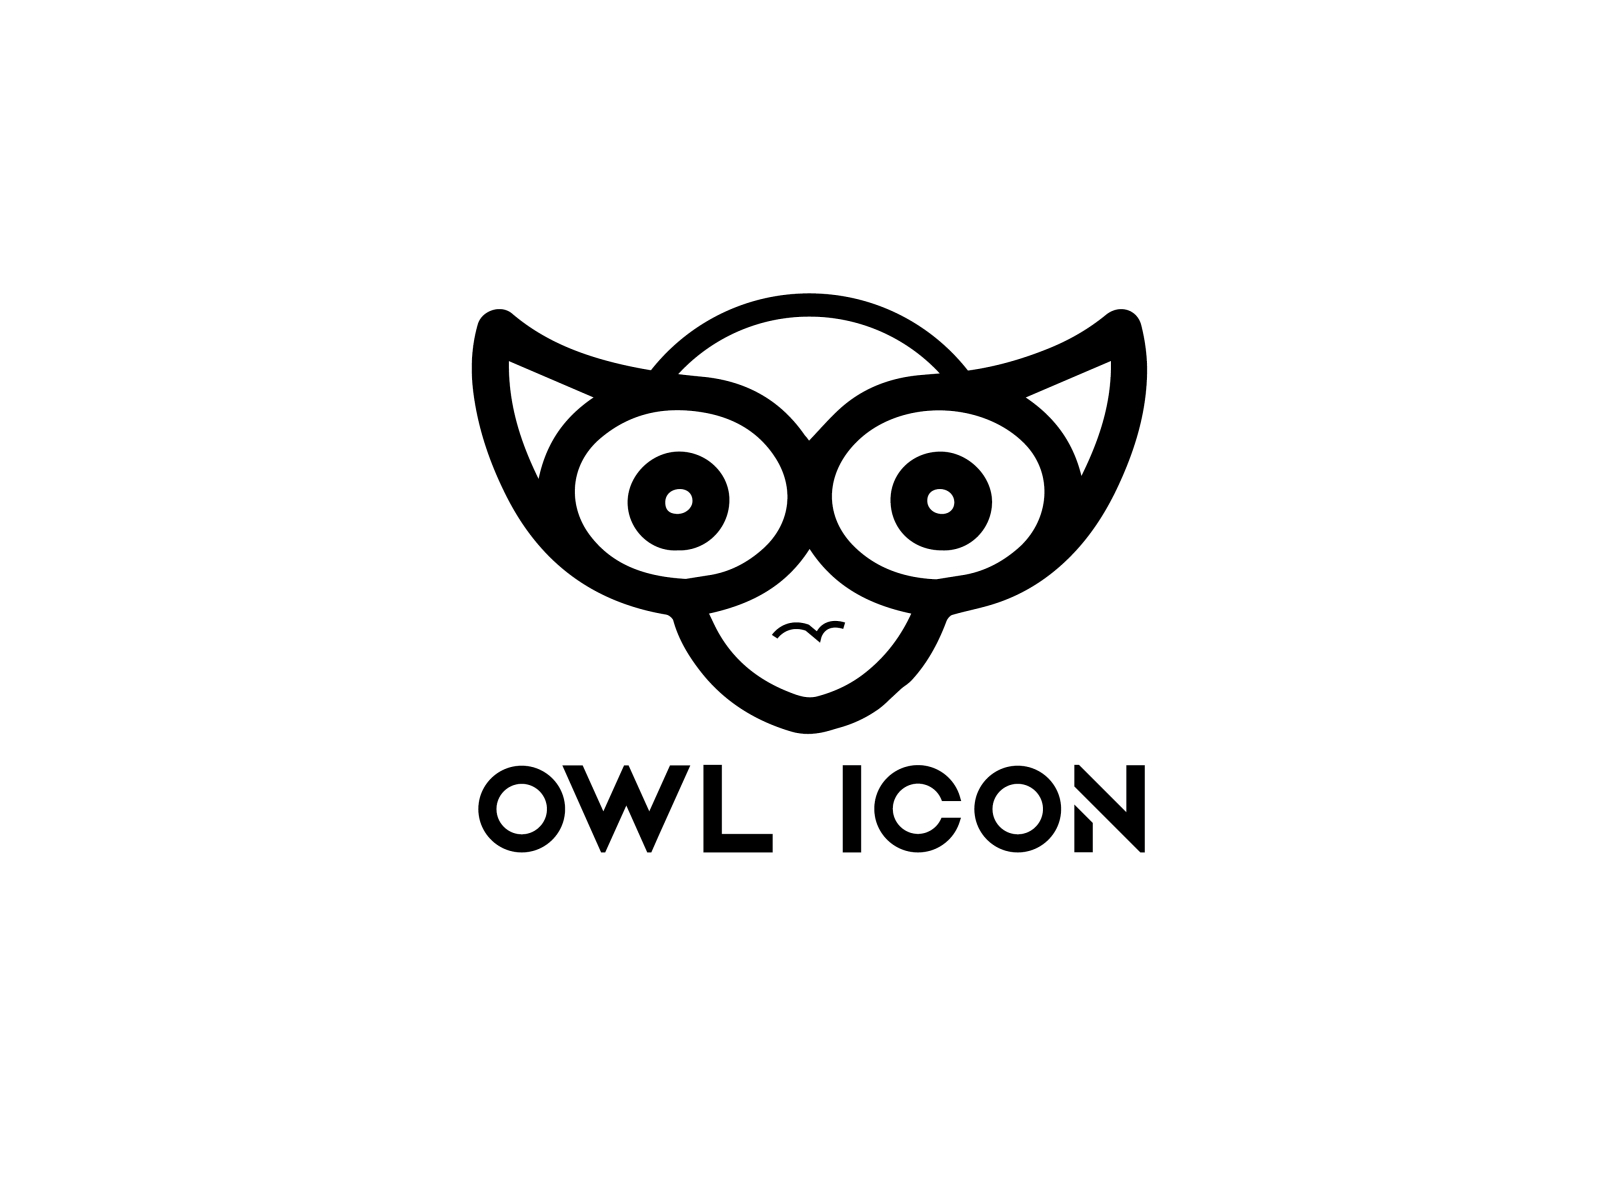 Owl creative icon logo by Abdullah All Mamun Rahat on Dribbble